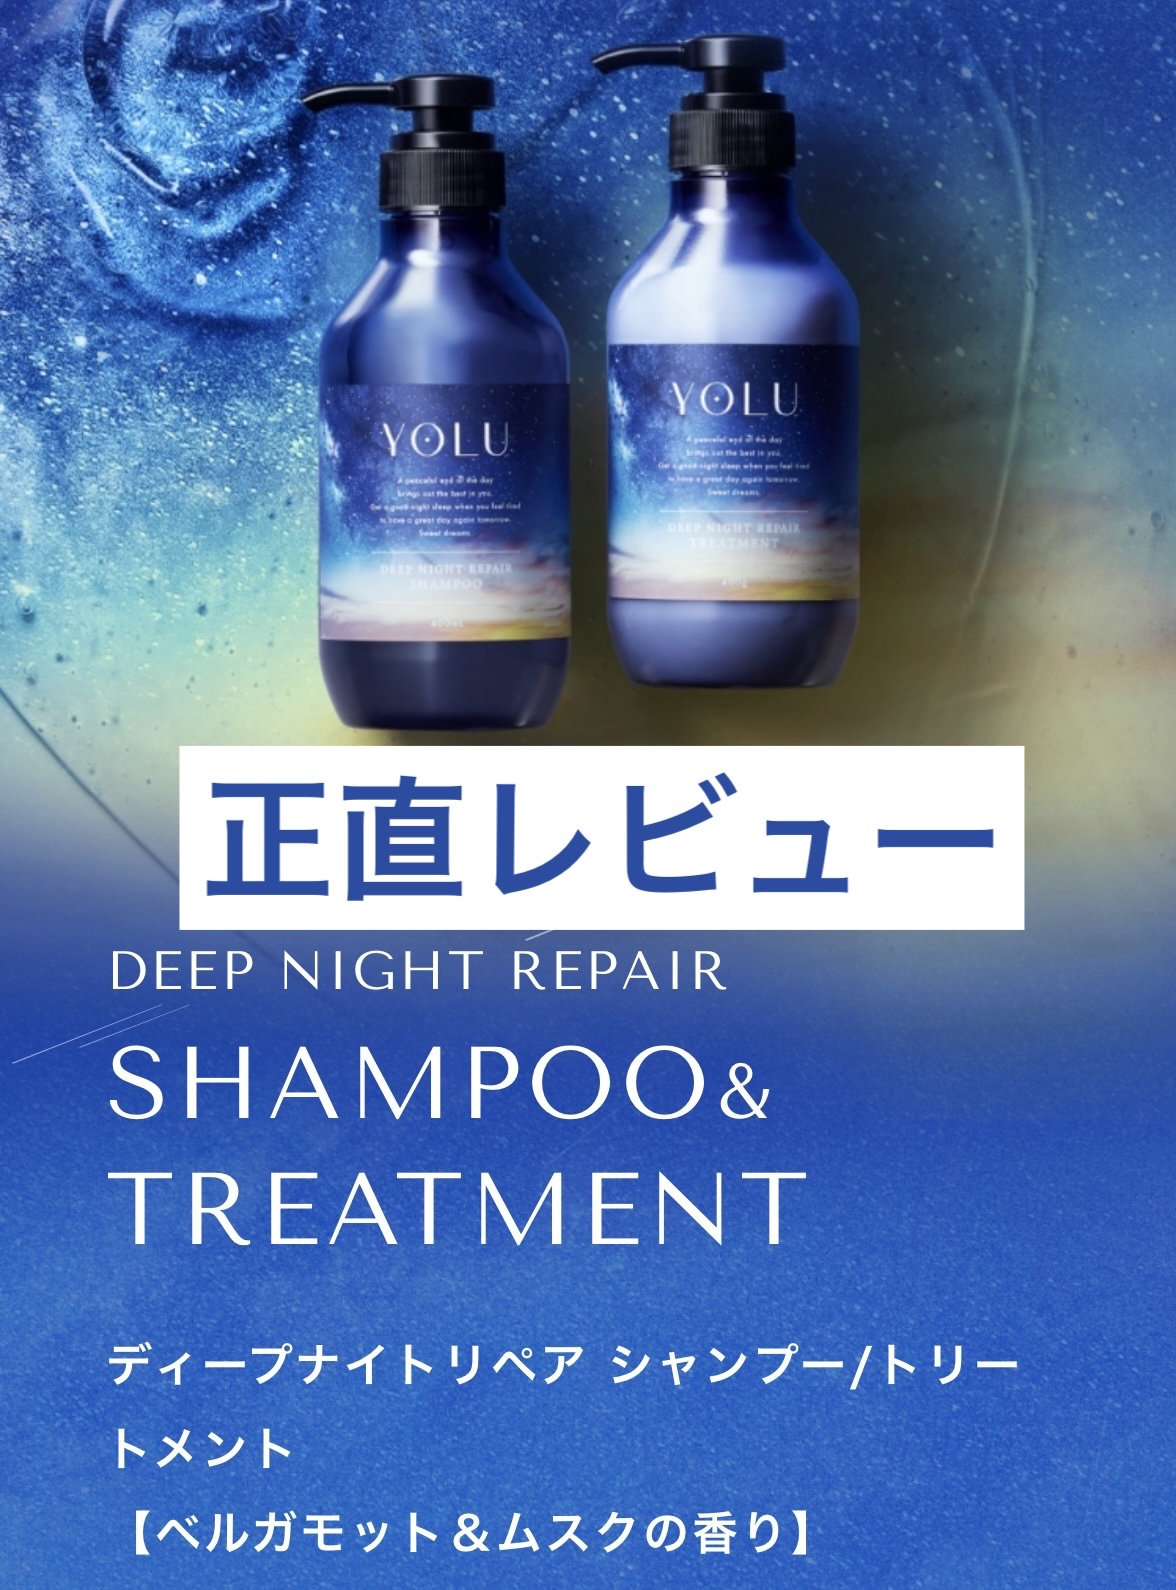 YOLU ヨル | バームヘアマスク ディープナイトリペア 145g 夜間美容 バームヘアマスク ヘアパック ヘアトリートメント 洗い流す